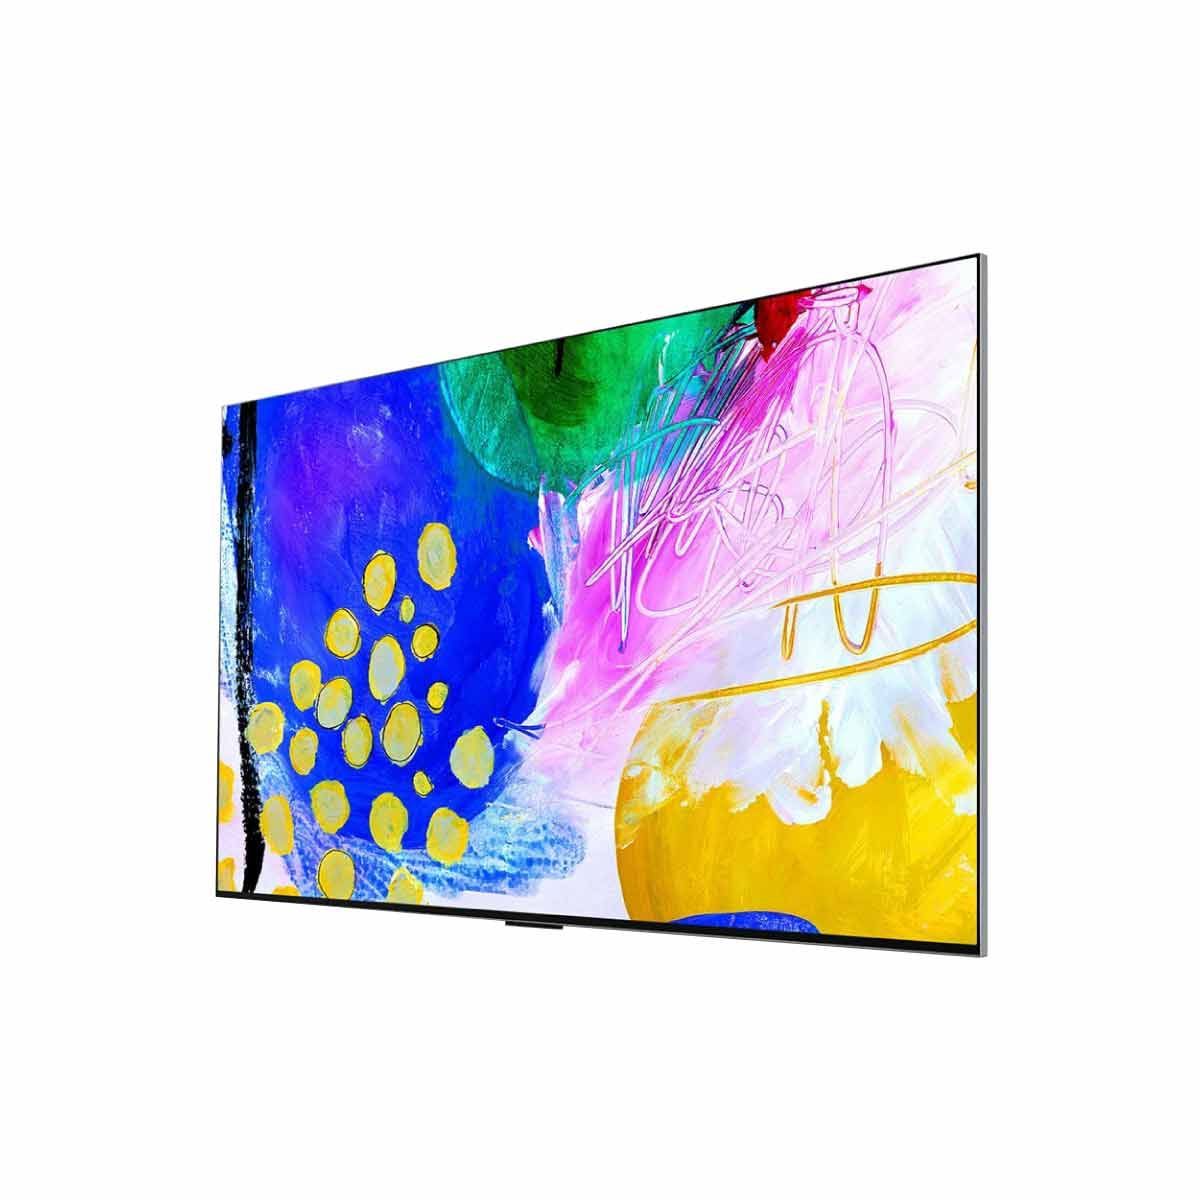 LG OLED EVO TV 4K Smart TV รุ่น OLED65G2PSA  สมาร์ททีวี 65 นิ้ว Dolby Vision Atmos